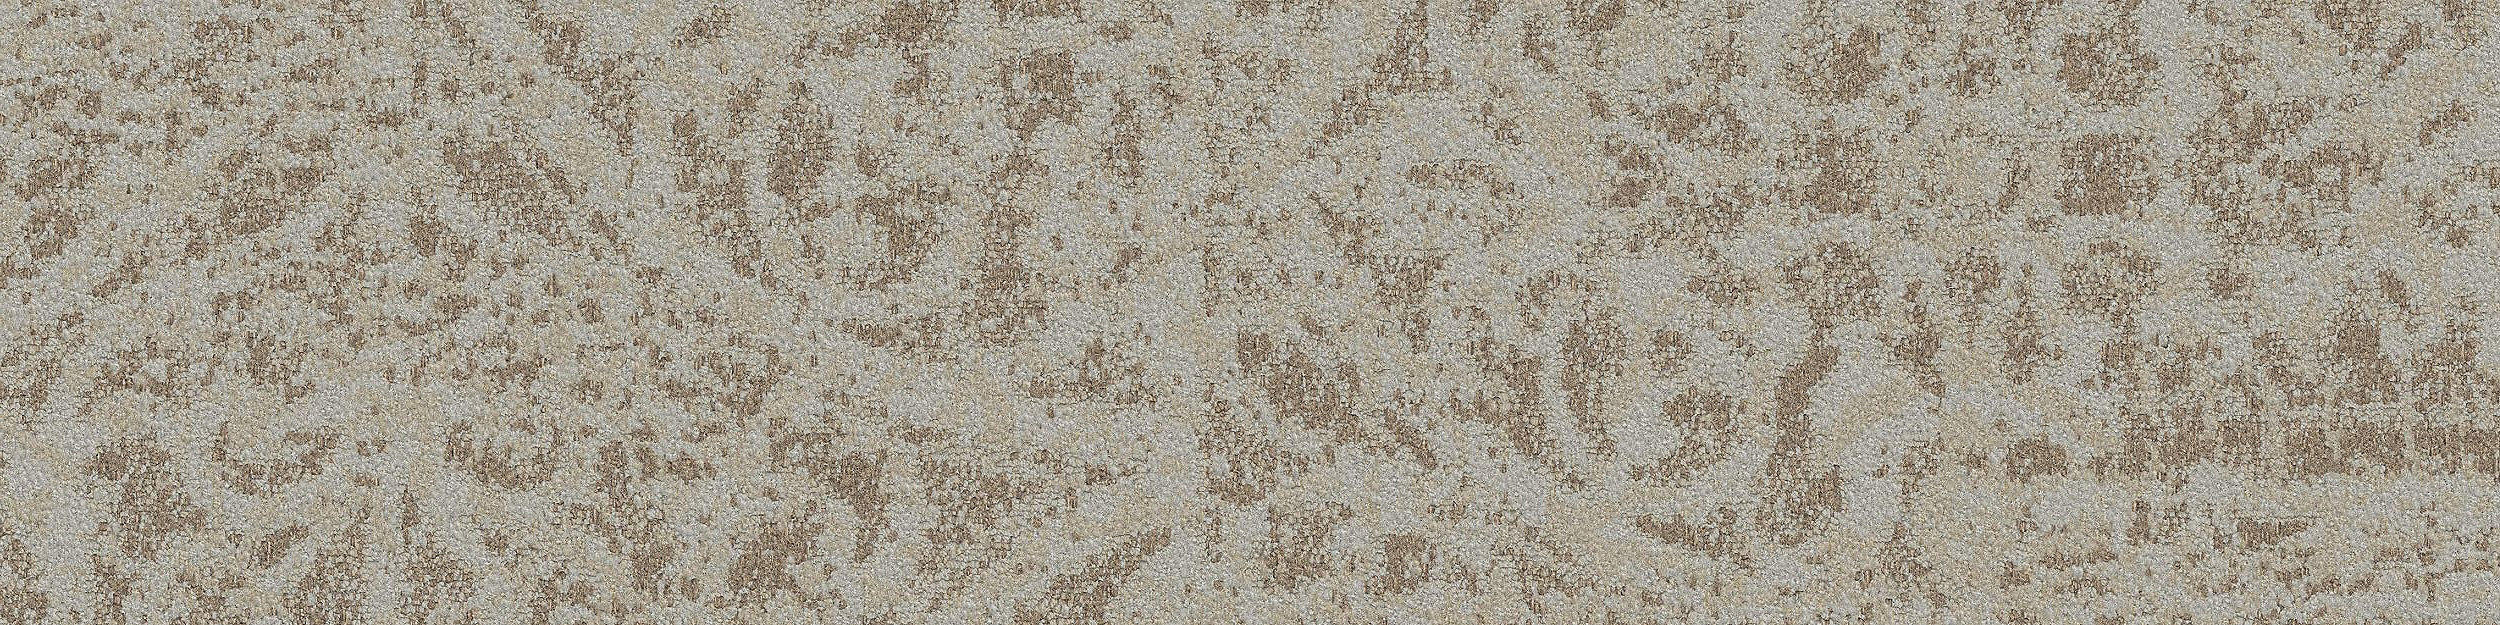 PM47 Carpet Tile In Garden Stone image number 3